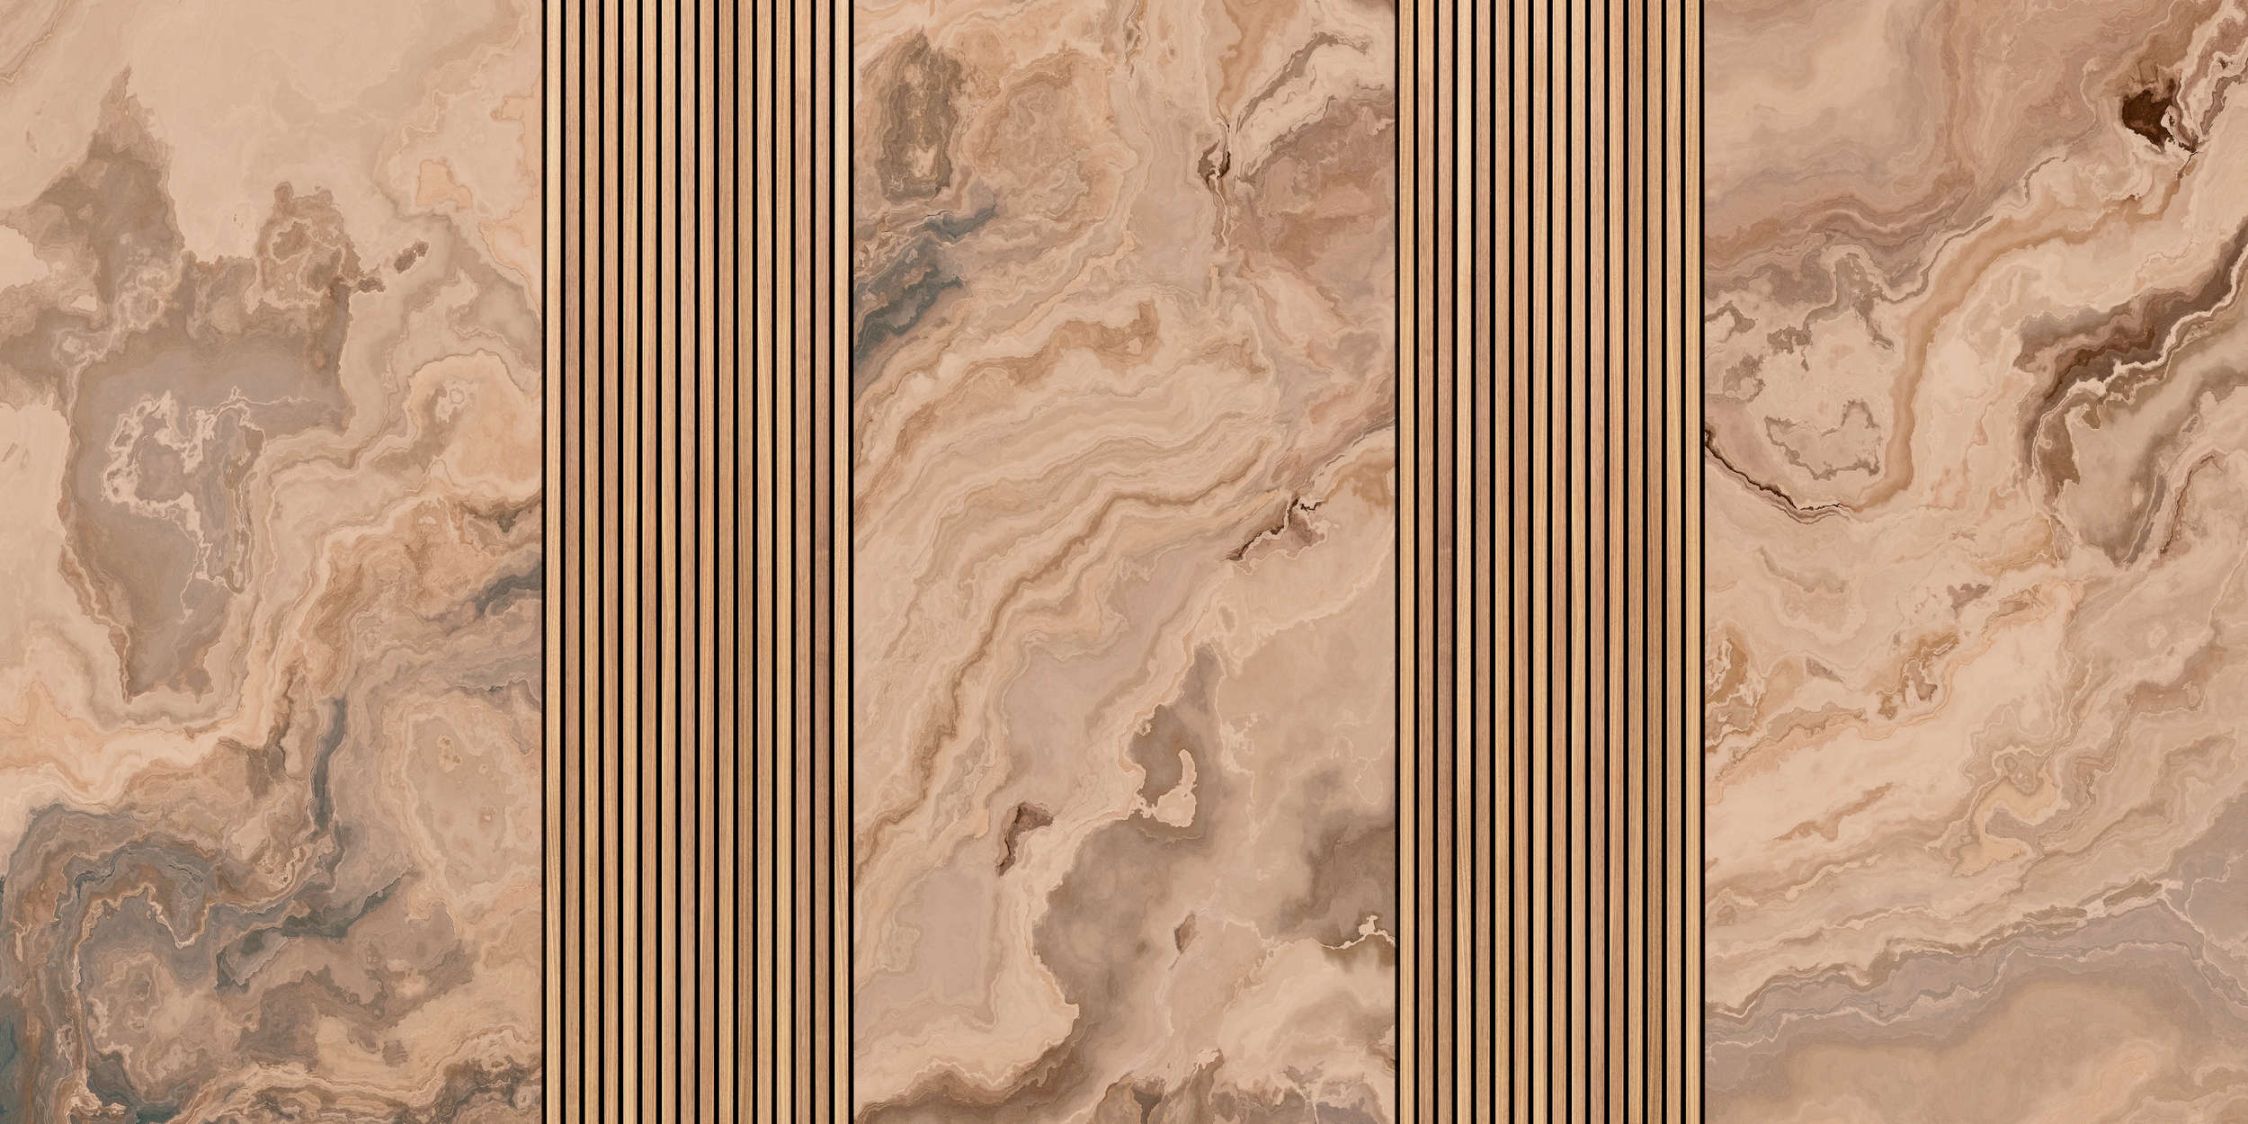             Photo wallpaper »travertino 2« - Panels & marble - Light brown | Smooth, slightly shiny premium non-woven fabric
        